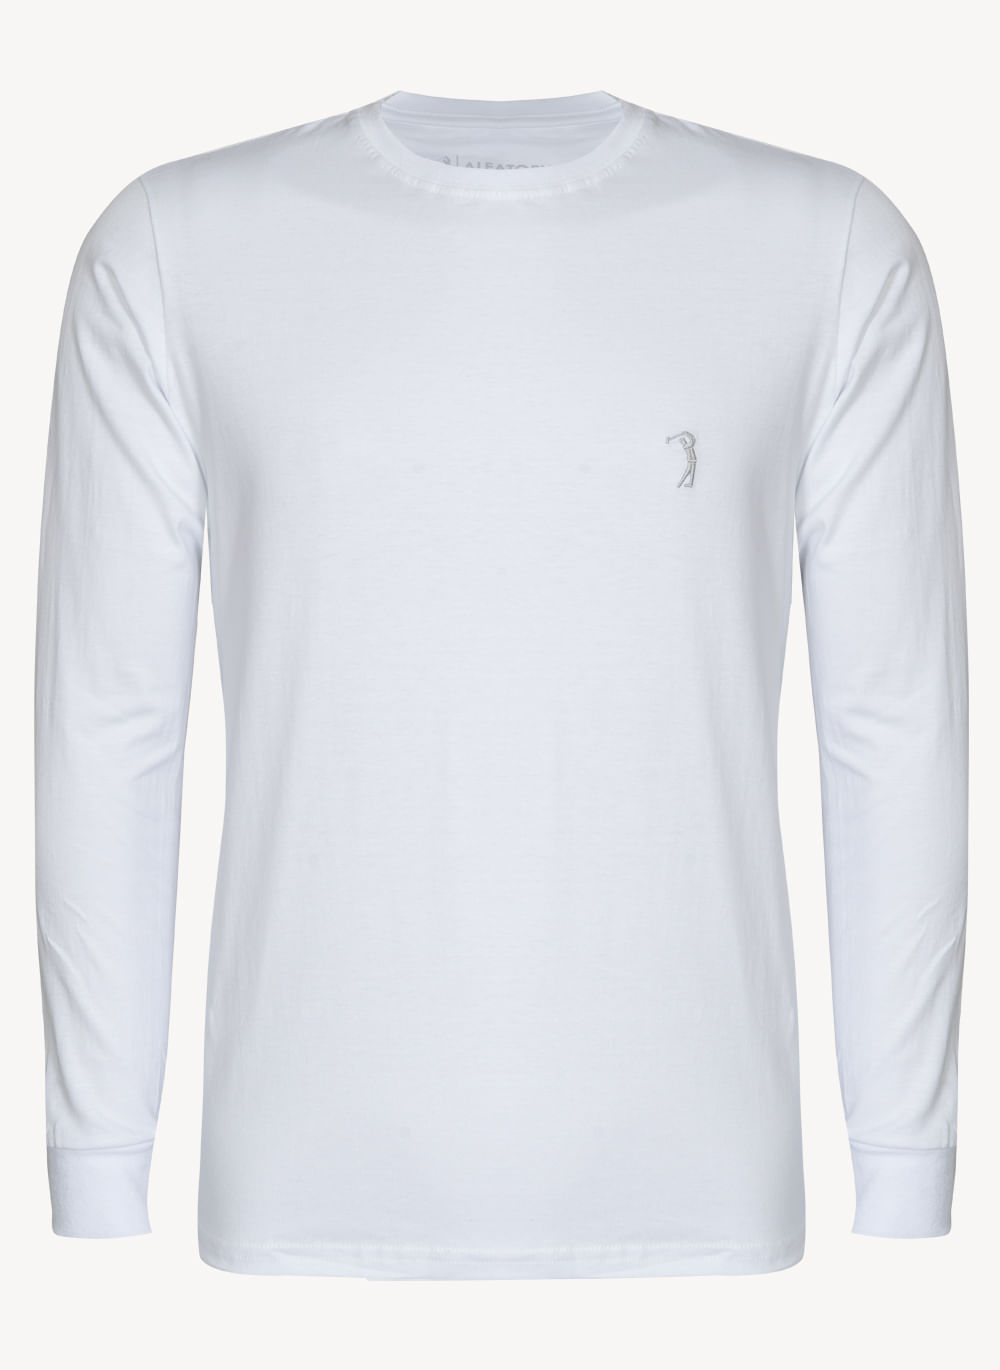 Camiseta-Aleatory-Basica-Manga-Longa-Freedom-Branca-Branco-P